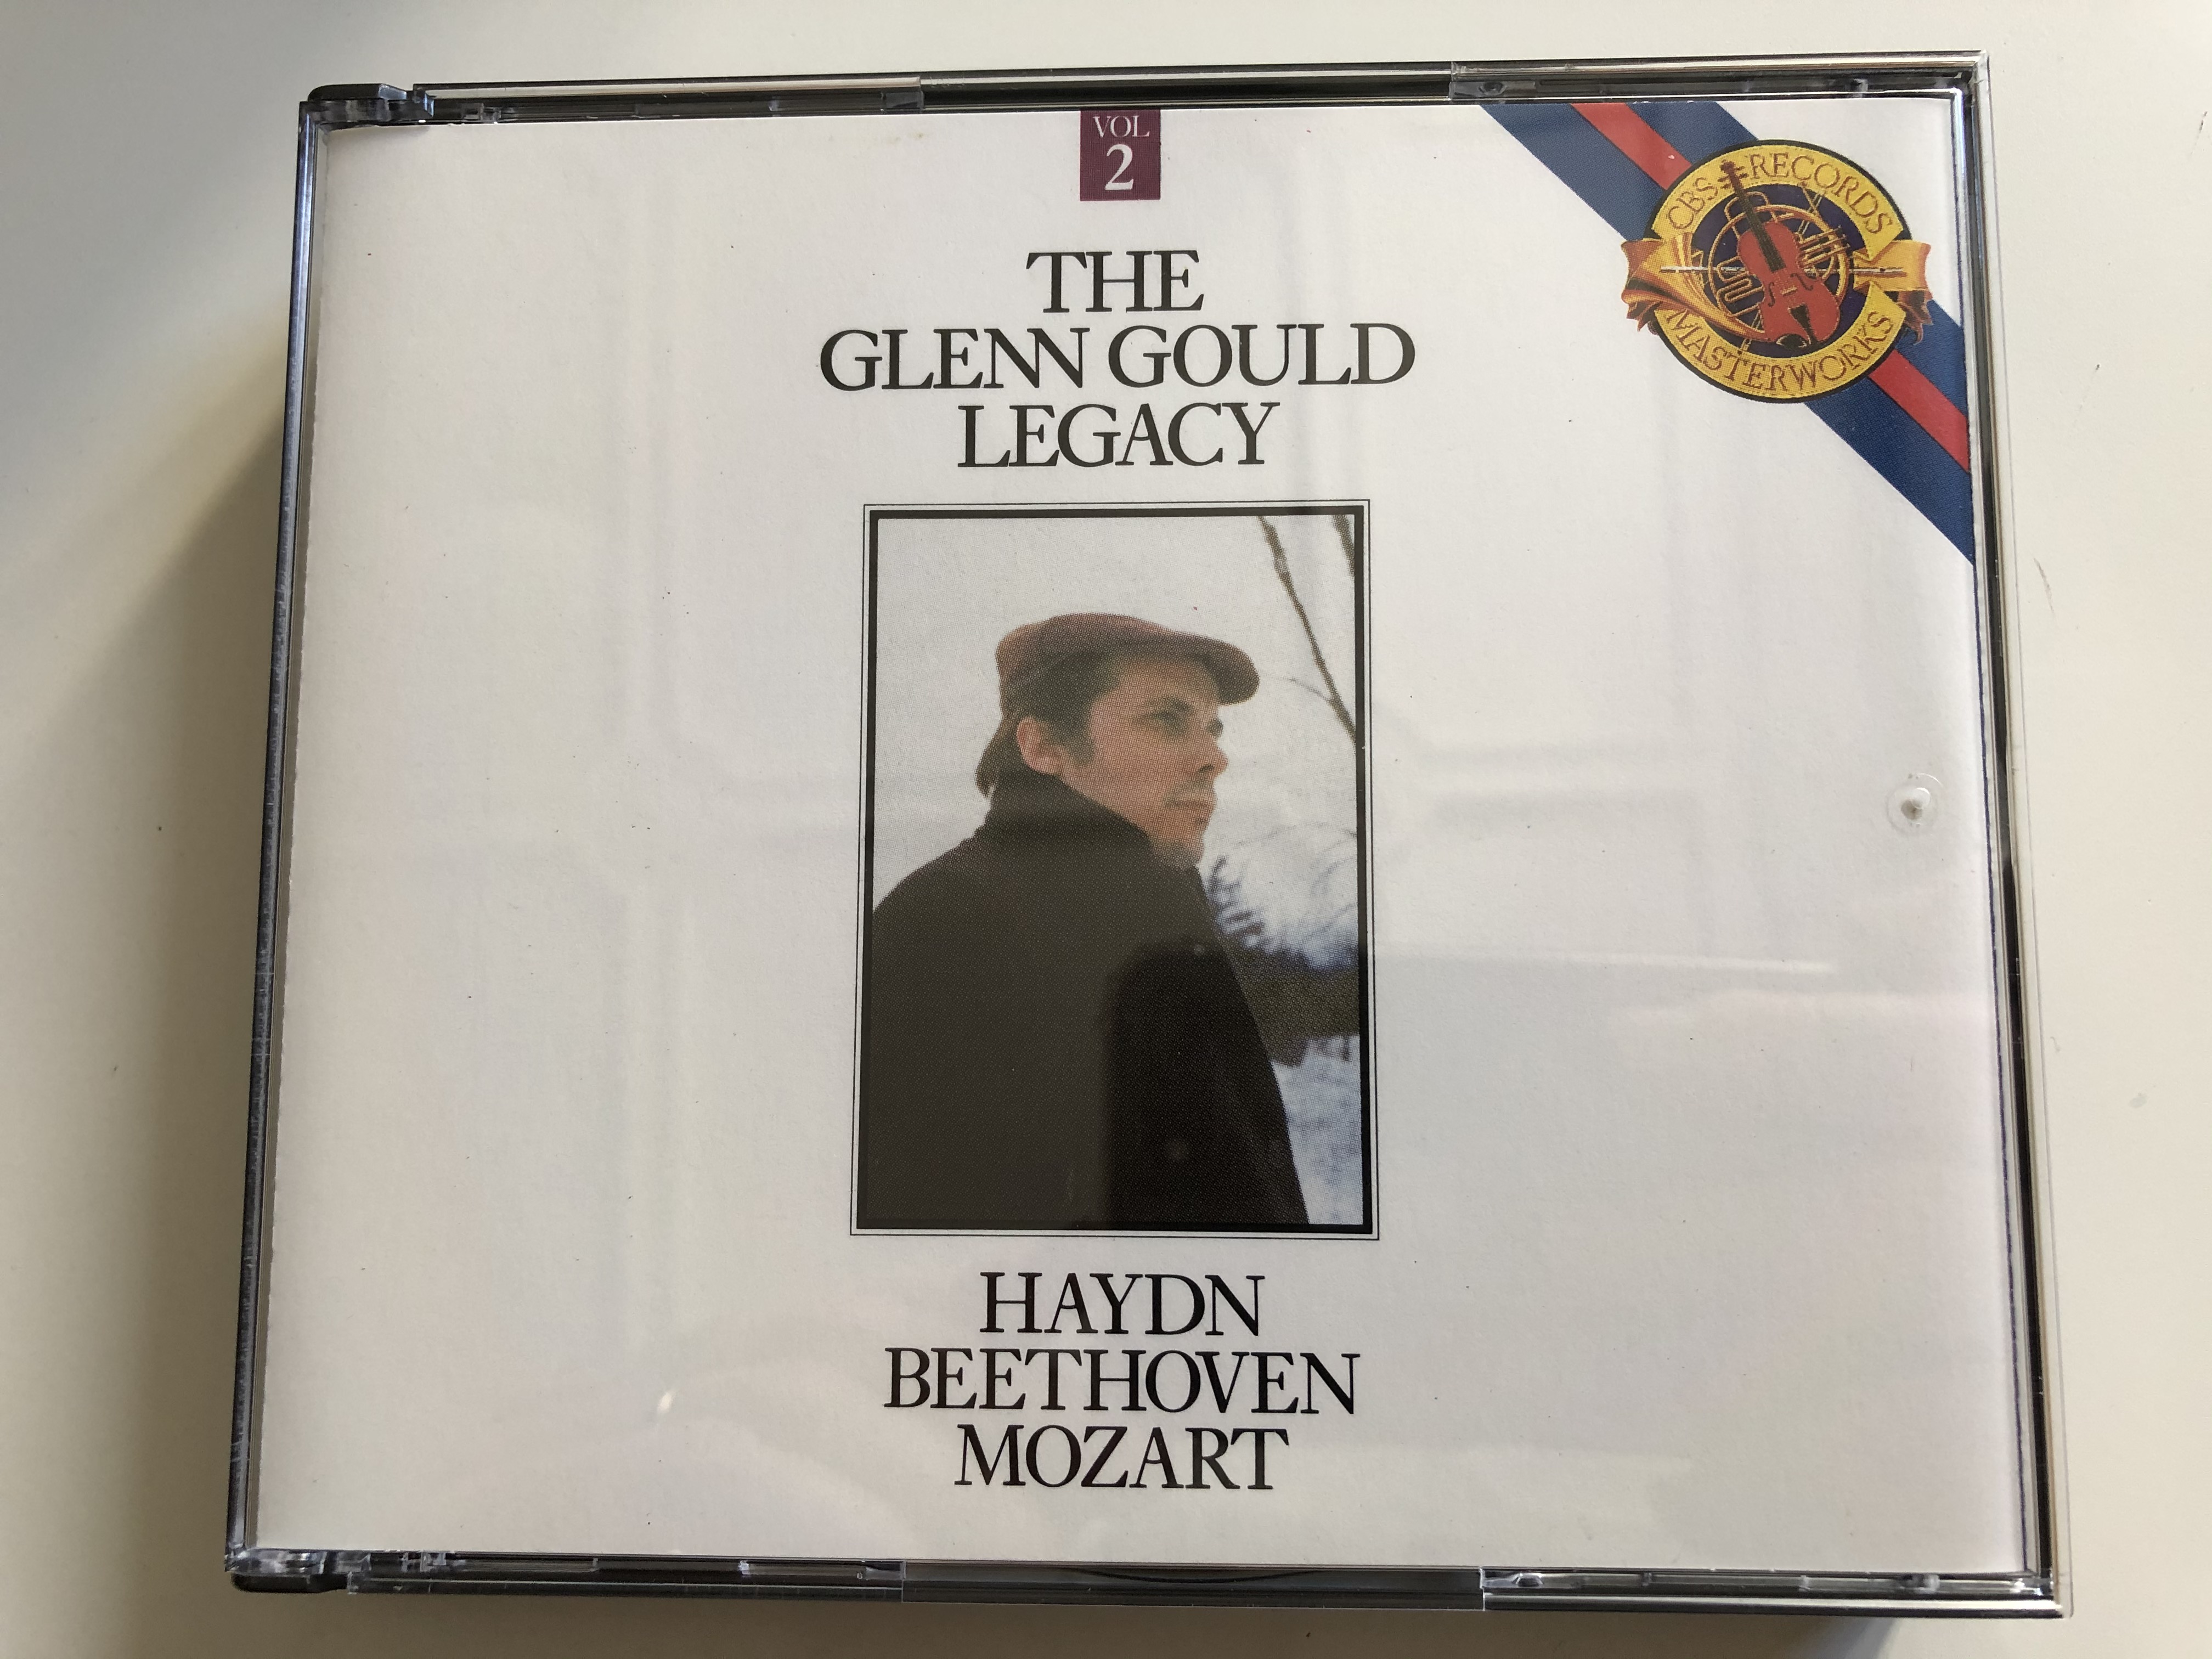 the-glenn-gould-legacy-vol.-2-haydn-beethoven-mozart-cbs-masterworks-3x-audio-cd-1985-stereo-m3k-39036-1-.jpg